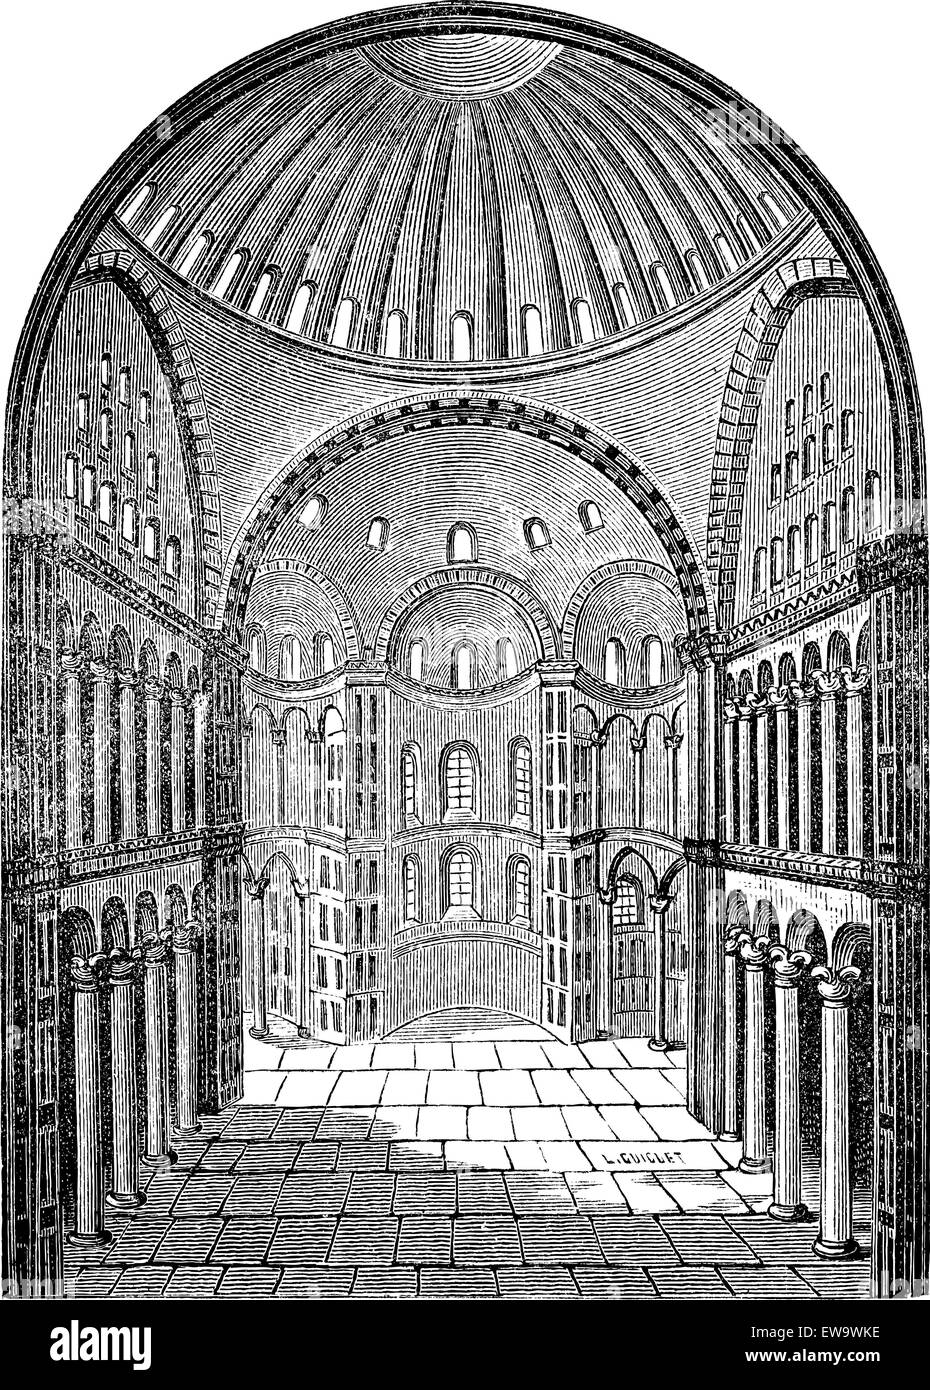 Innenansicht der Hagia Sophia in Istanbul, Türkei, graviert Vintage Illustration. Industrielle Enzyklopädie - E.O Lami - 1875 Stock Vektor